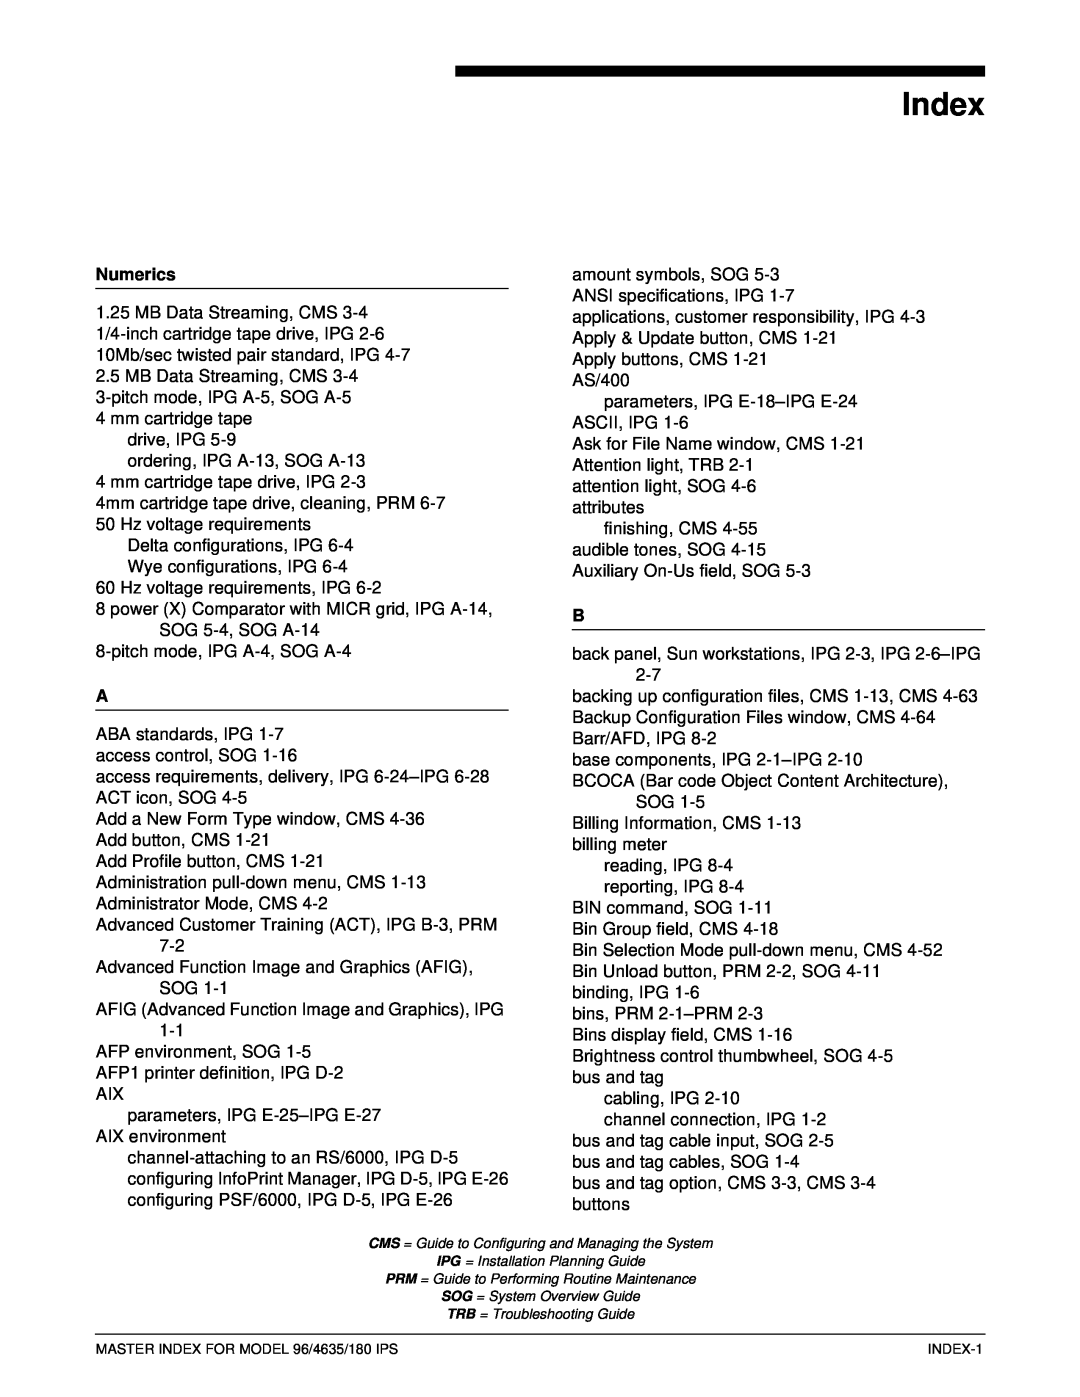 Xerox 96 IPS, 4635 IPS manual Numerics, Index 